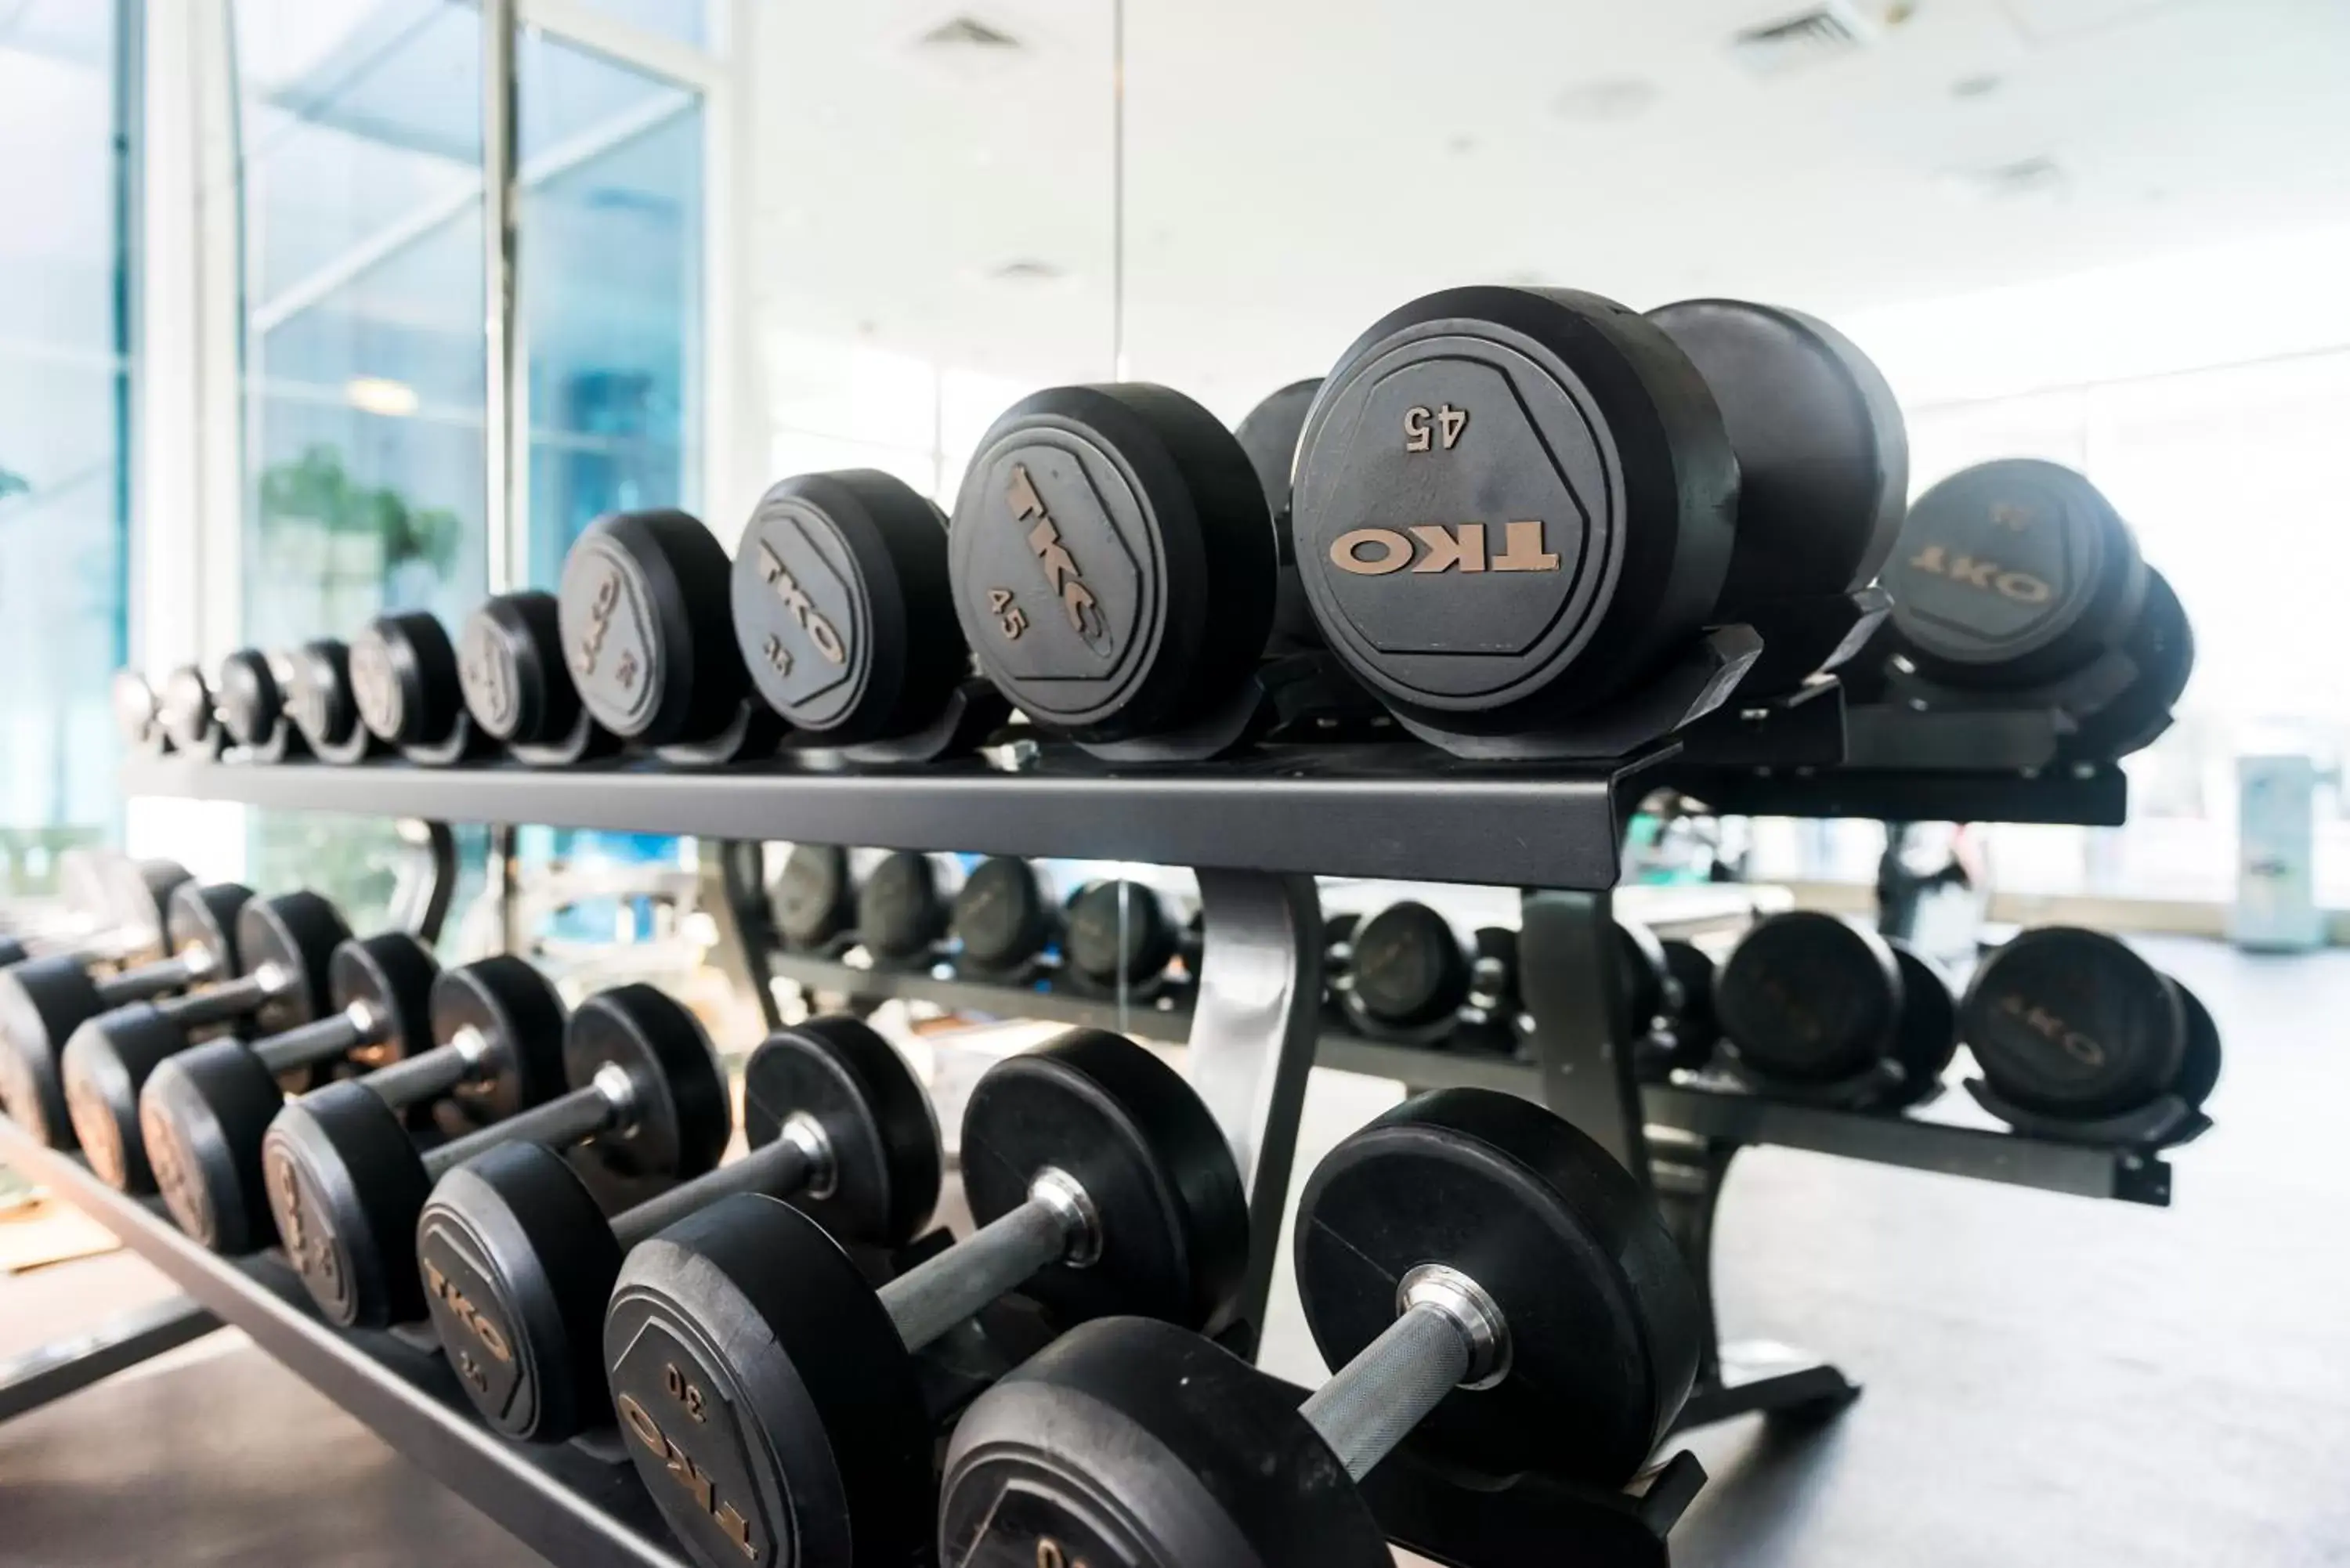 Fitness centre/facilities in Jannah Place Dubai Marina